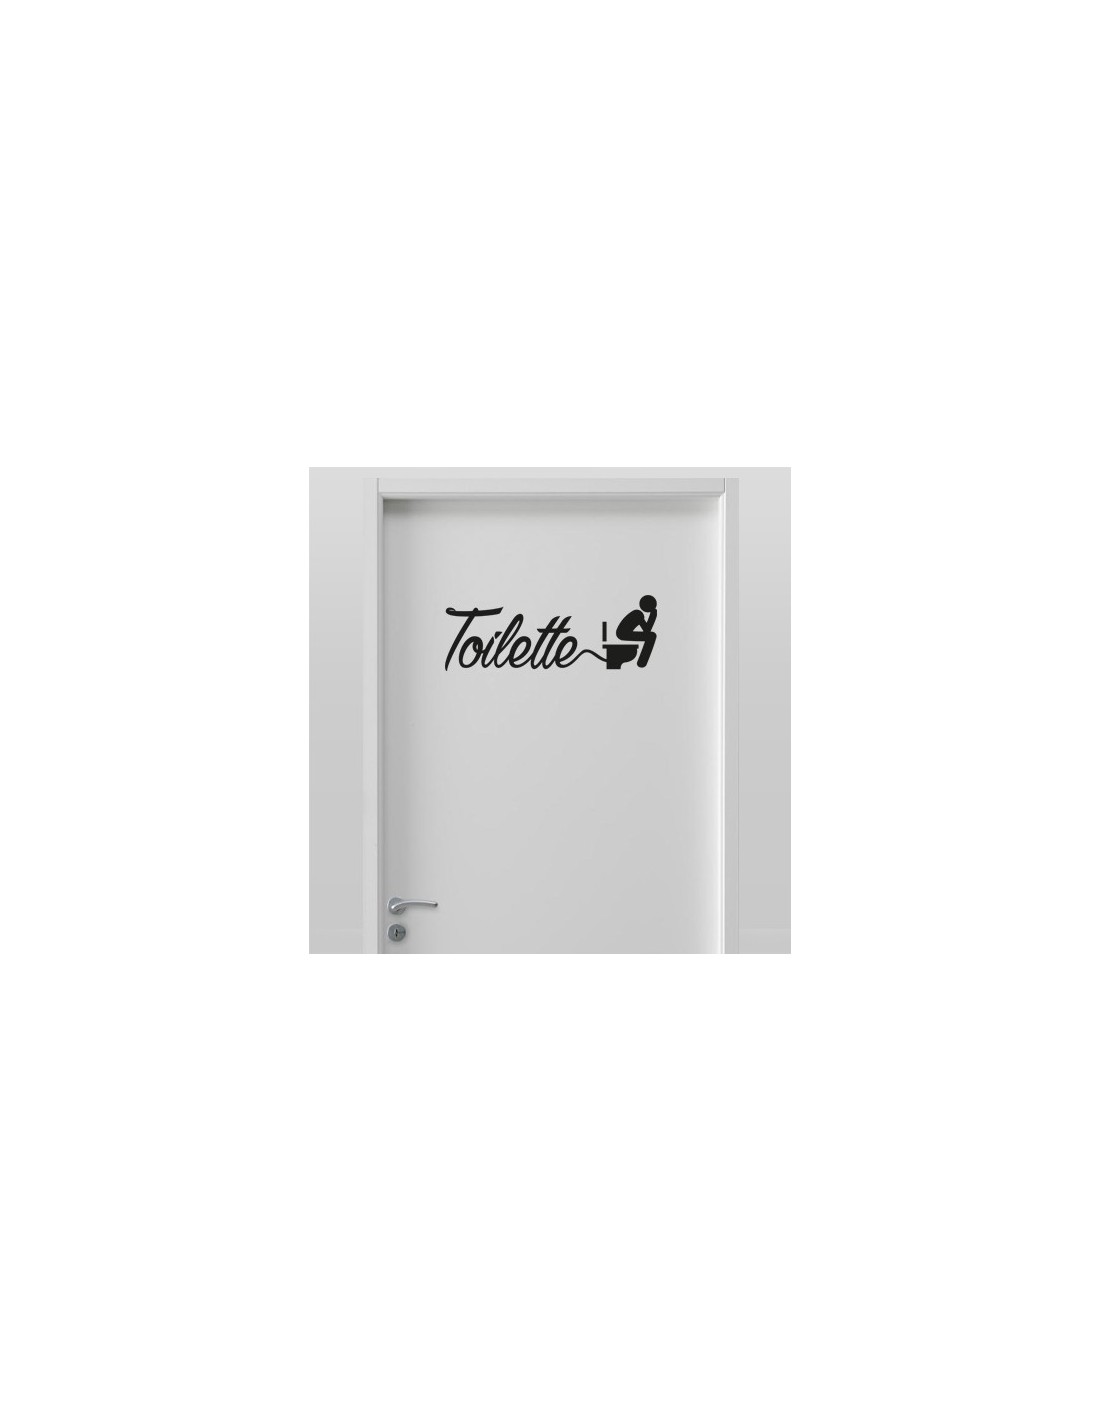 Sticker Plaque pour WC 1 pas cher - Stickers Toilettes WC discount - stickers  muraux - madeco-stickers